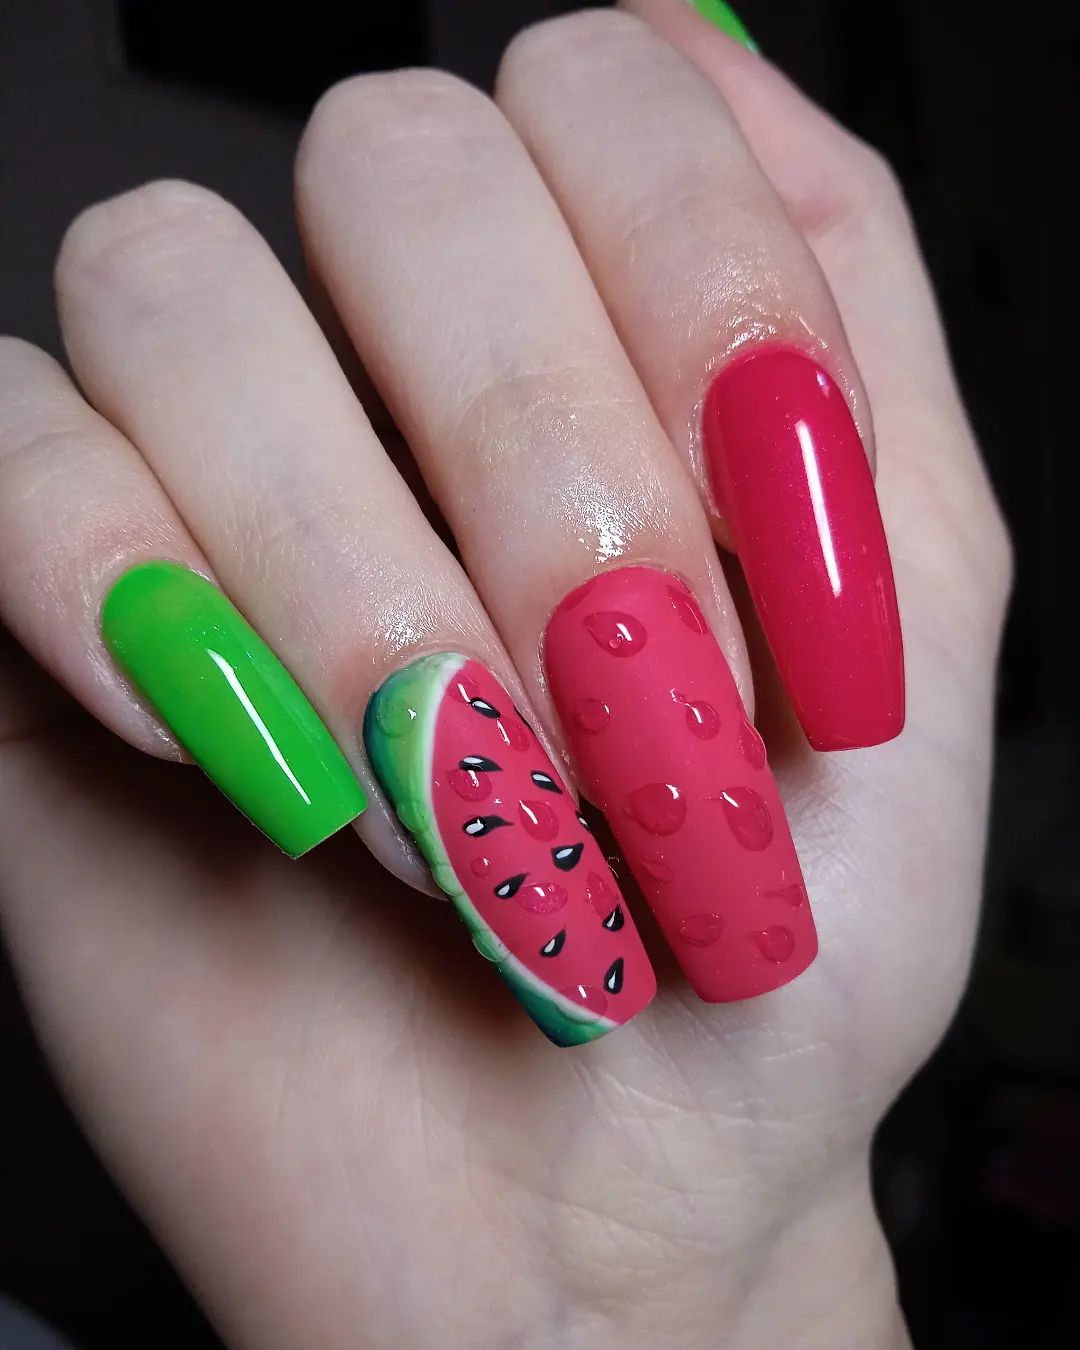 DIY Summer Watermelon Nails | Nail Art Tutorial - YouTube